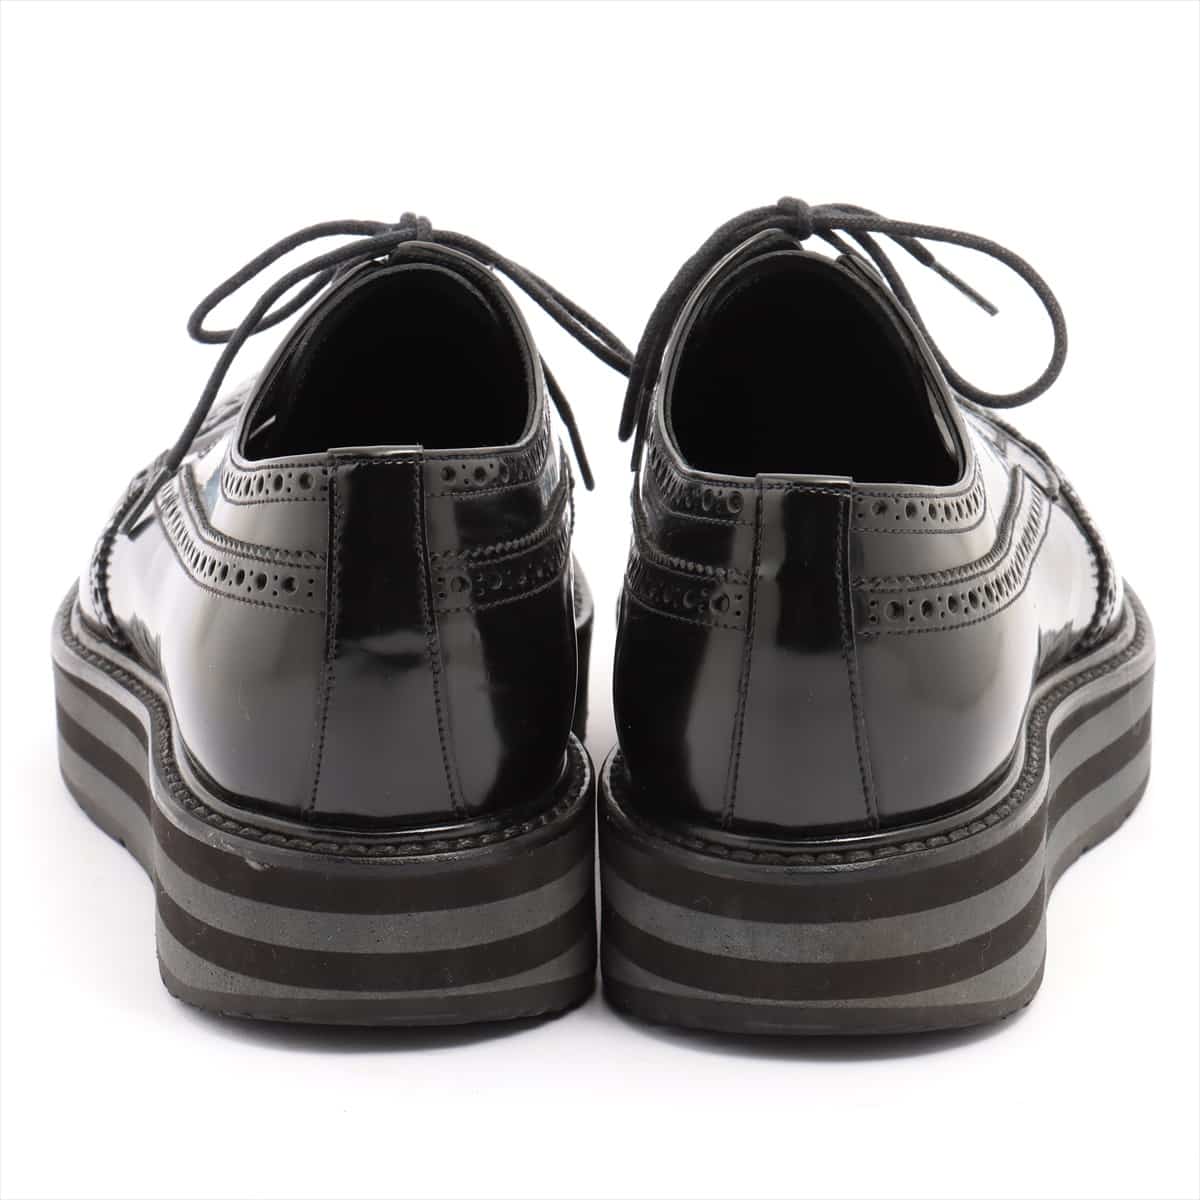 Prada Leather Dress shoes 7 1/2 Men's Black wingtip medallions